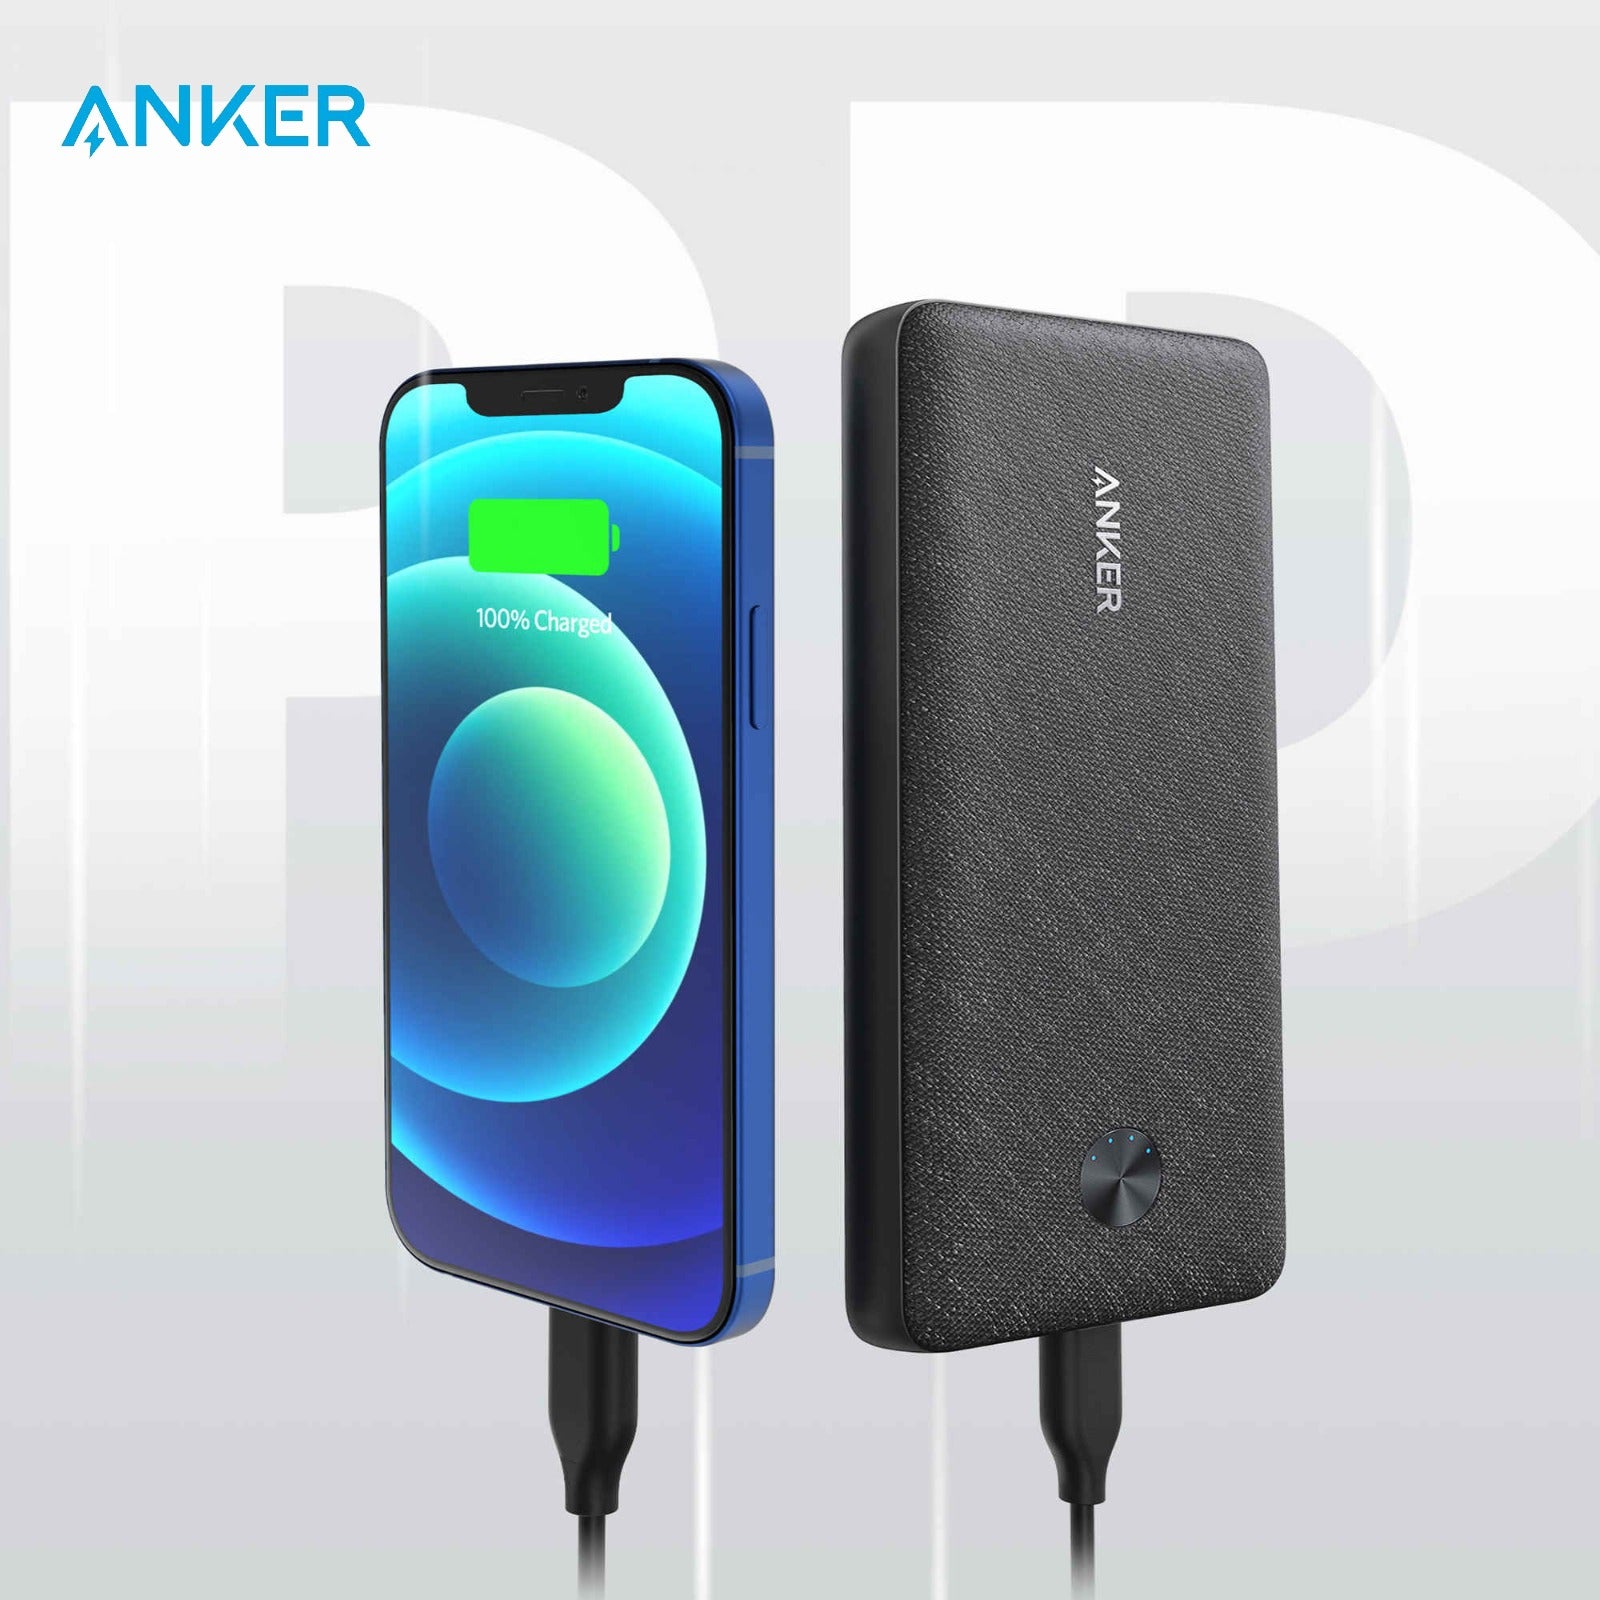 Anker PowerCore 10000mAh Power Bank charging a phone